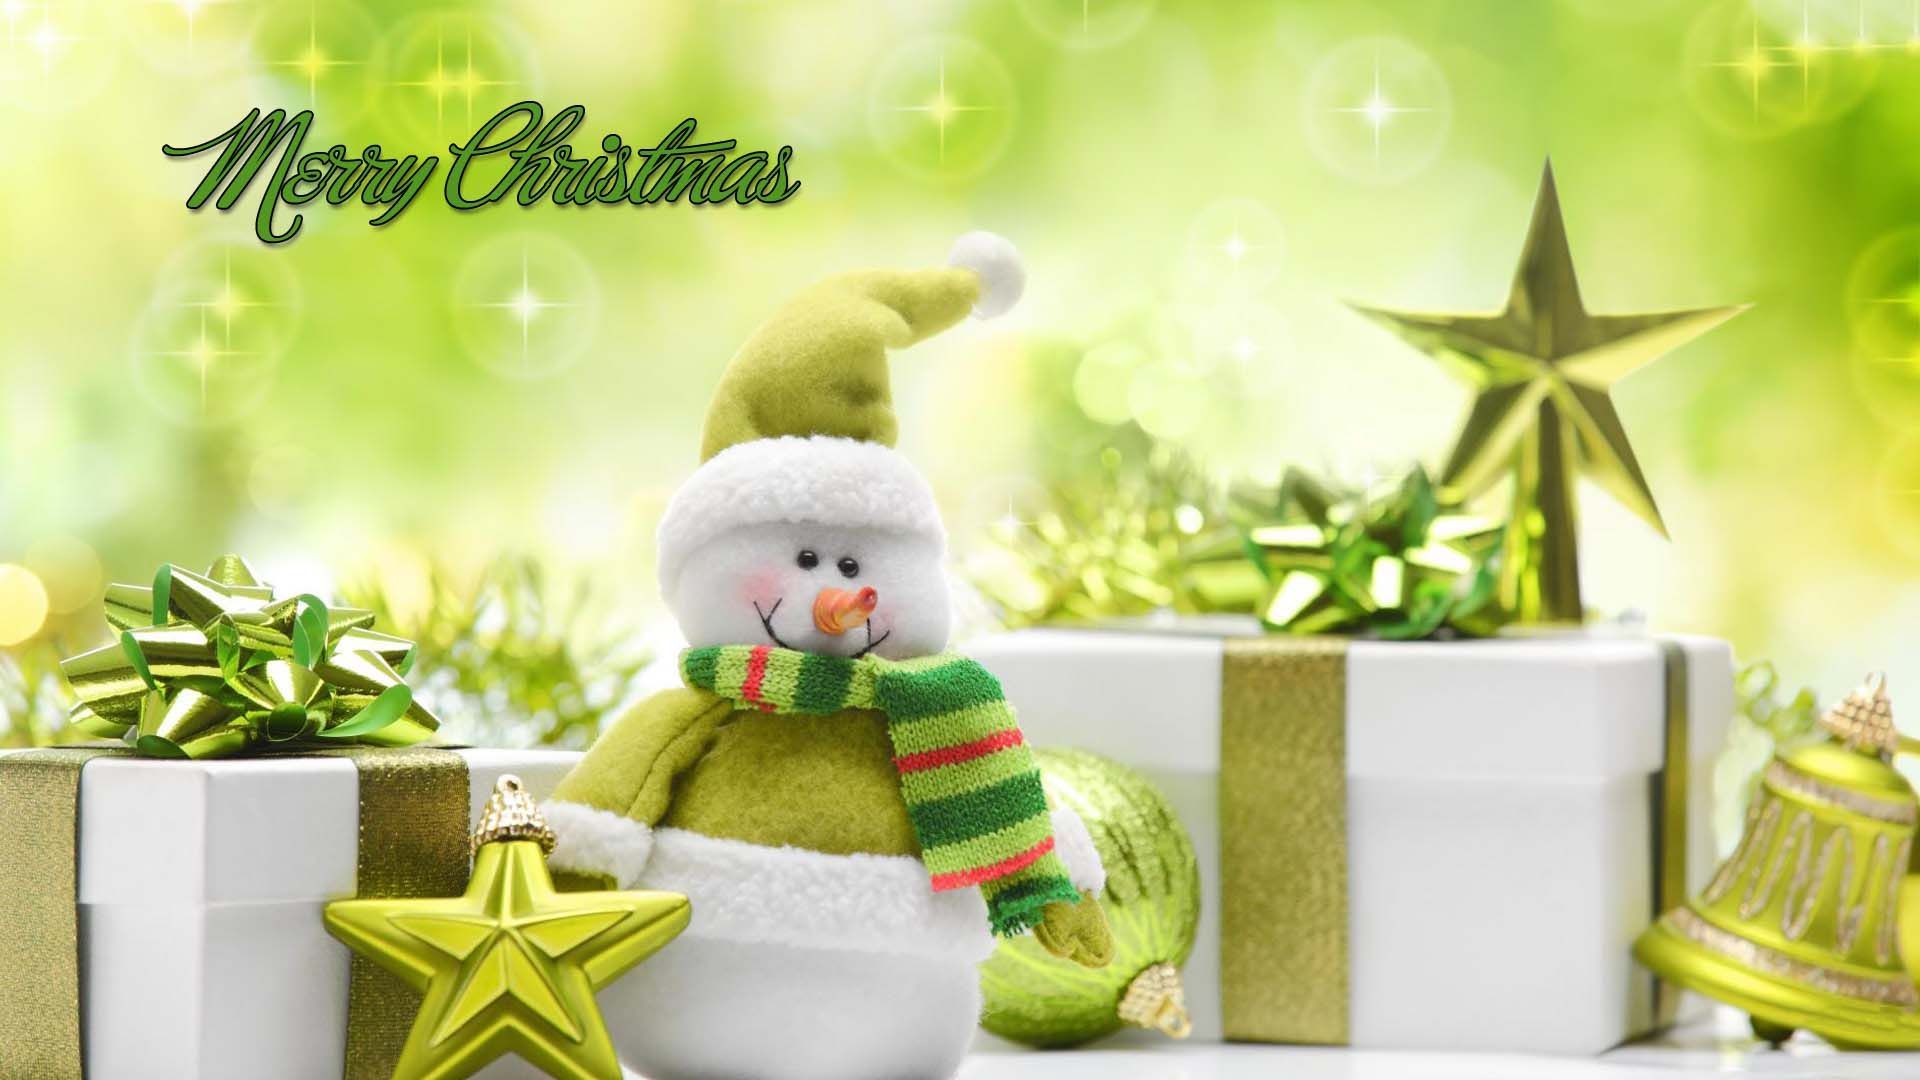 Cute Green Christmas Wallpaper. HD Christmas Wallpaper for Mobile and Desktop